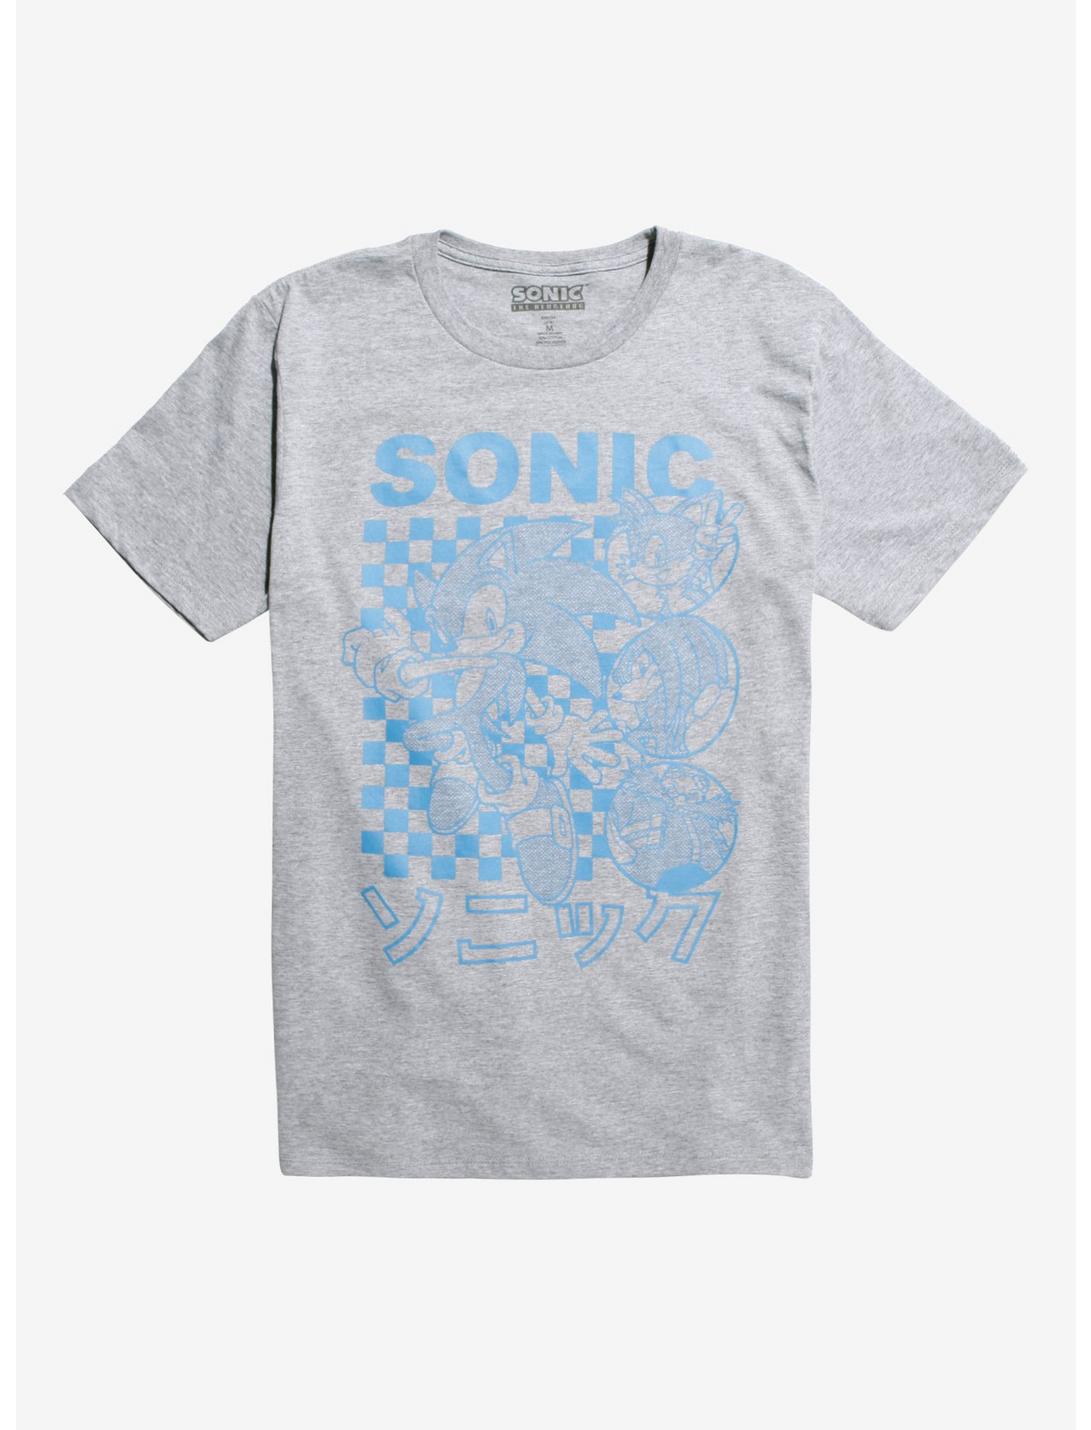 Sonic The Hedgehog Characters Grey T-Shirt, GREY, hi-res